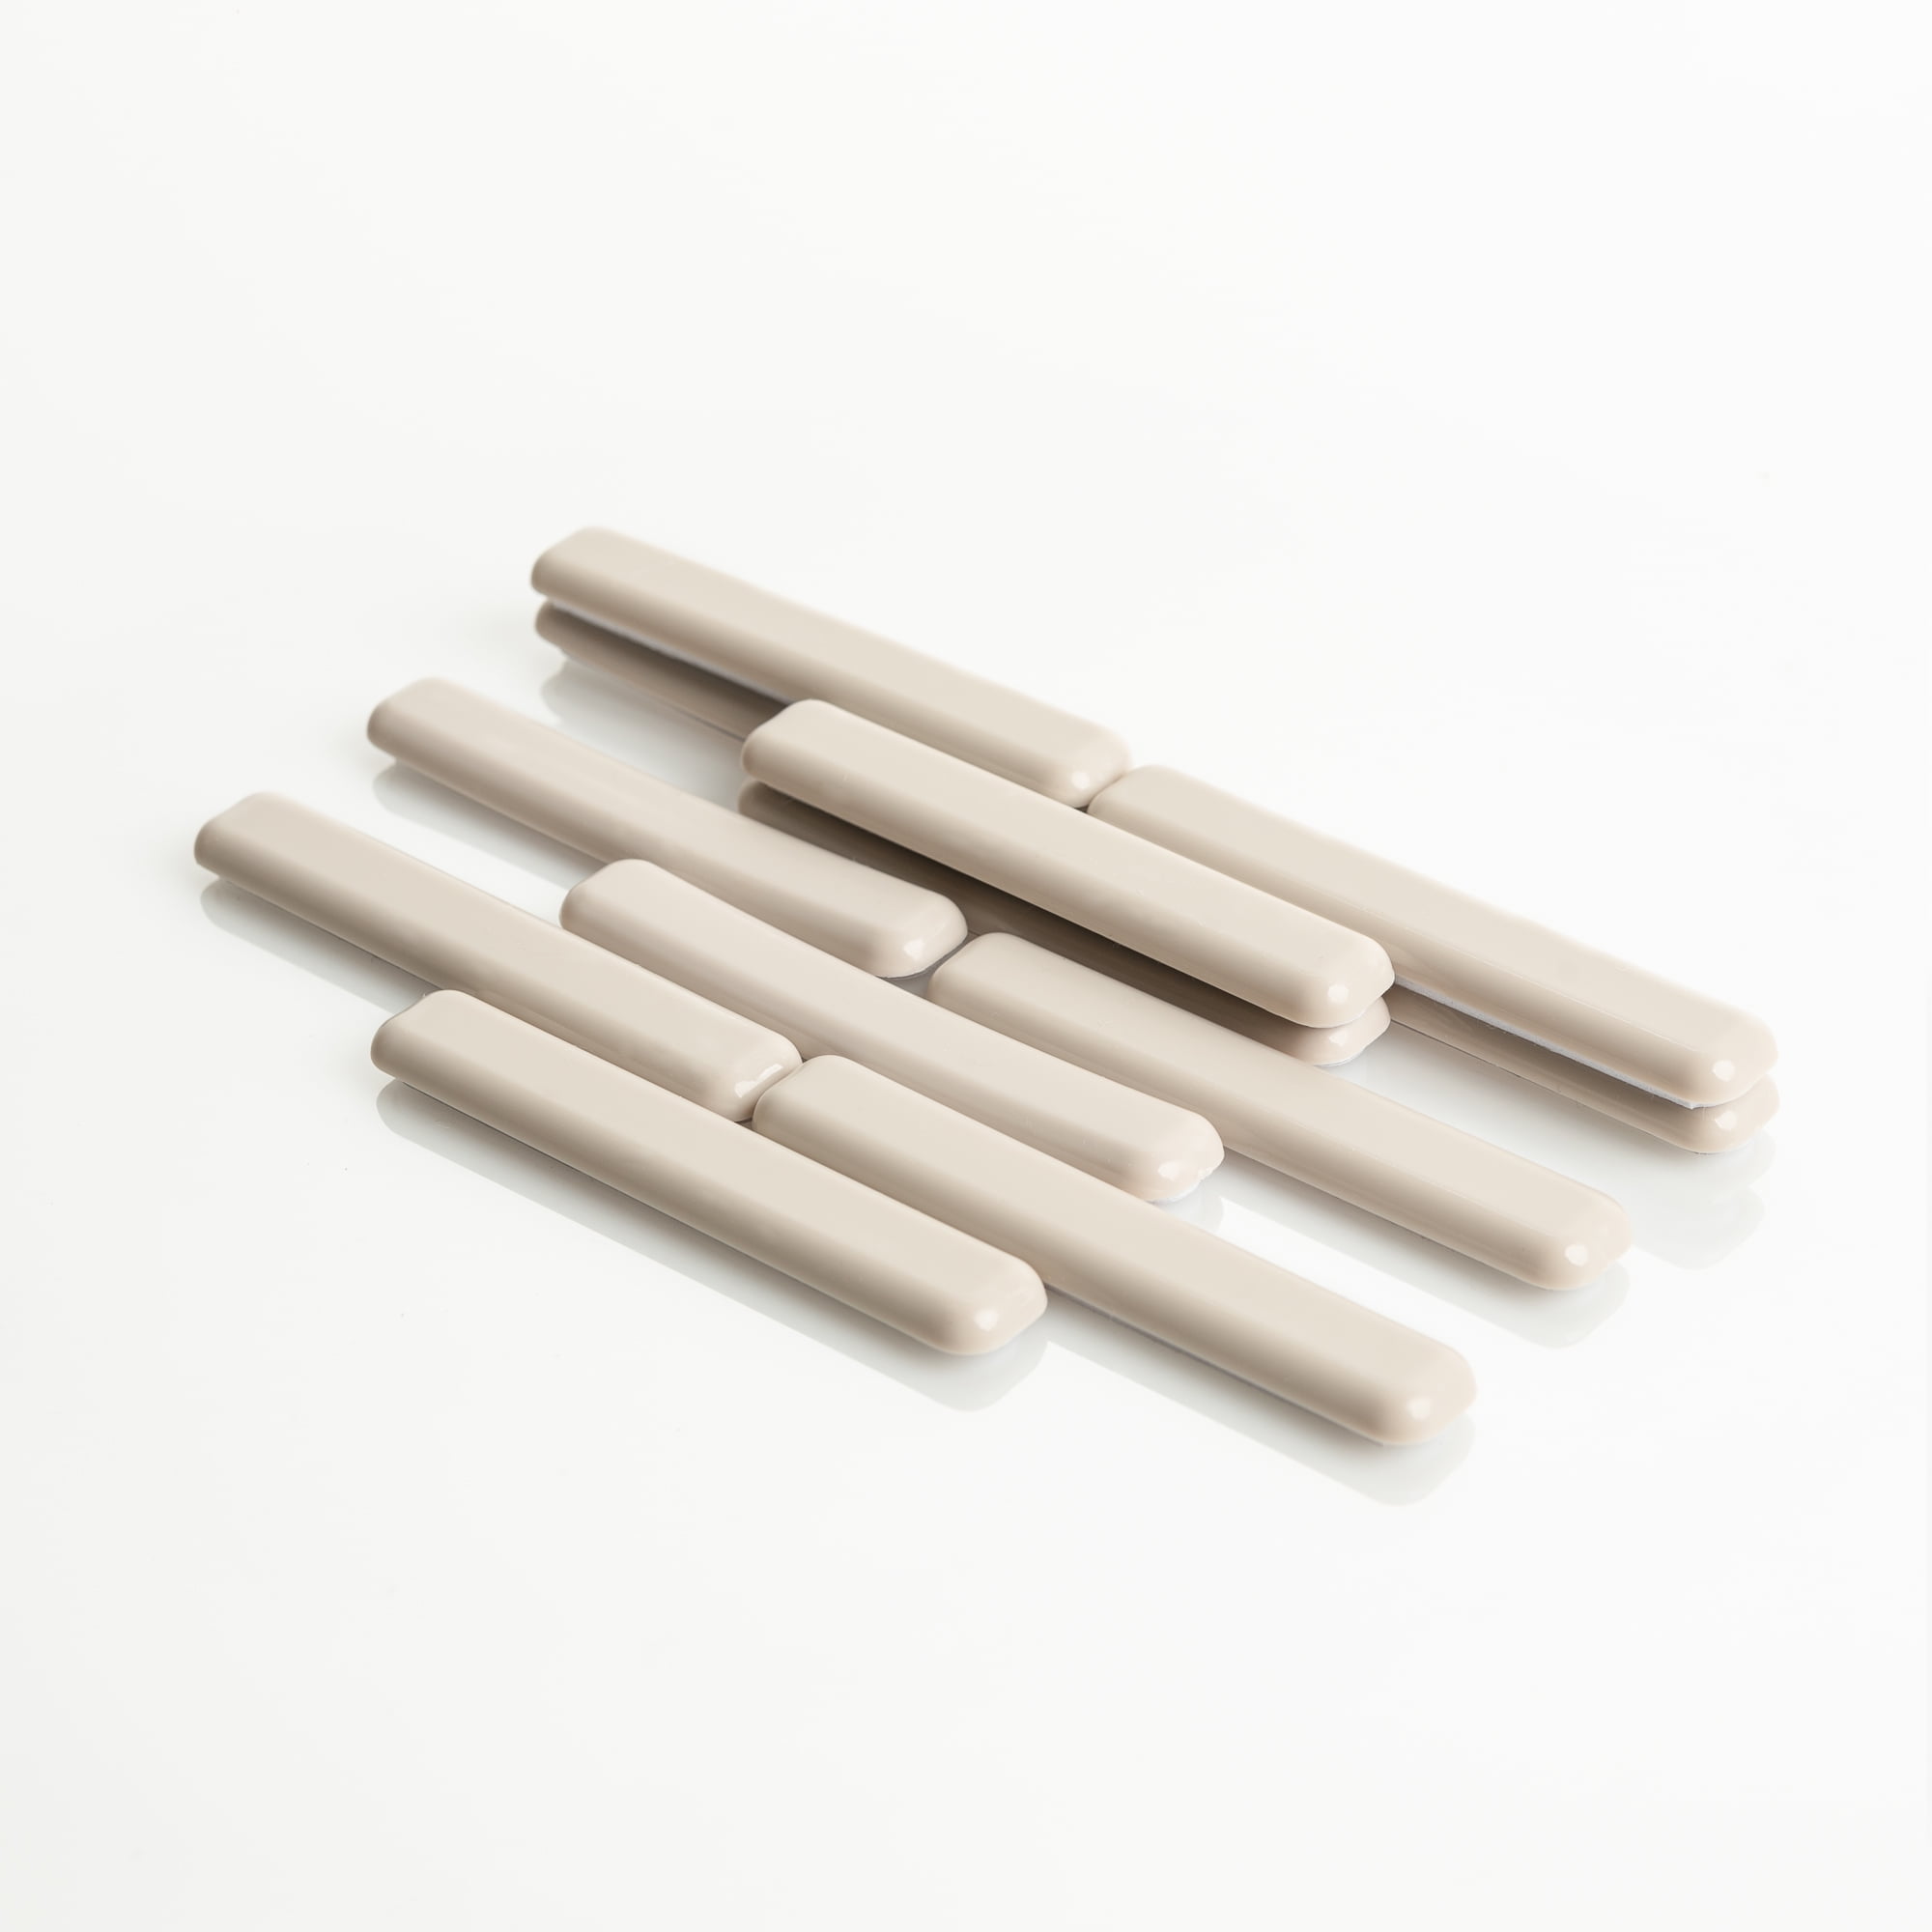 4 piece You Get 2 Packs Of 4 Self-Stick Bar Furniture Sliders 1/2" x 4" Bar 